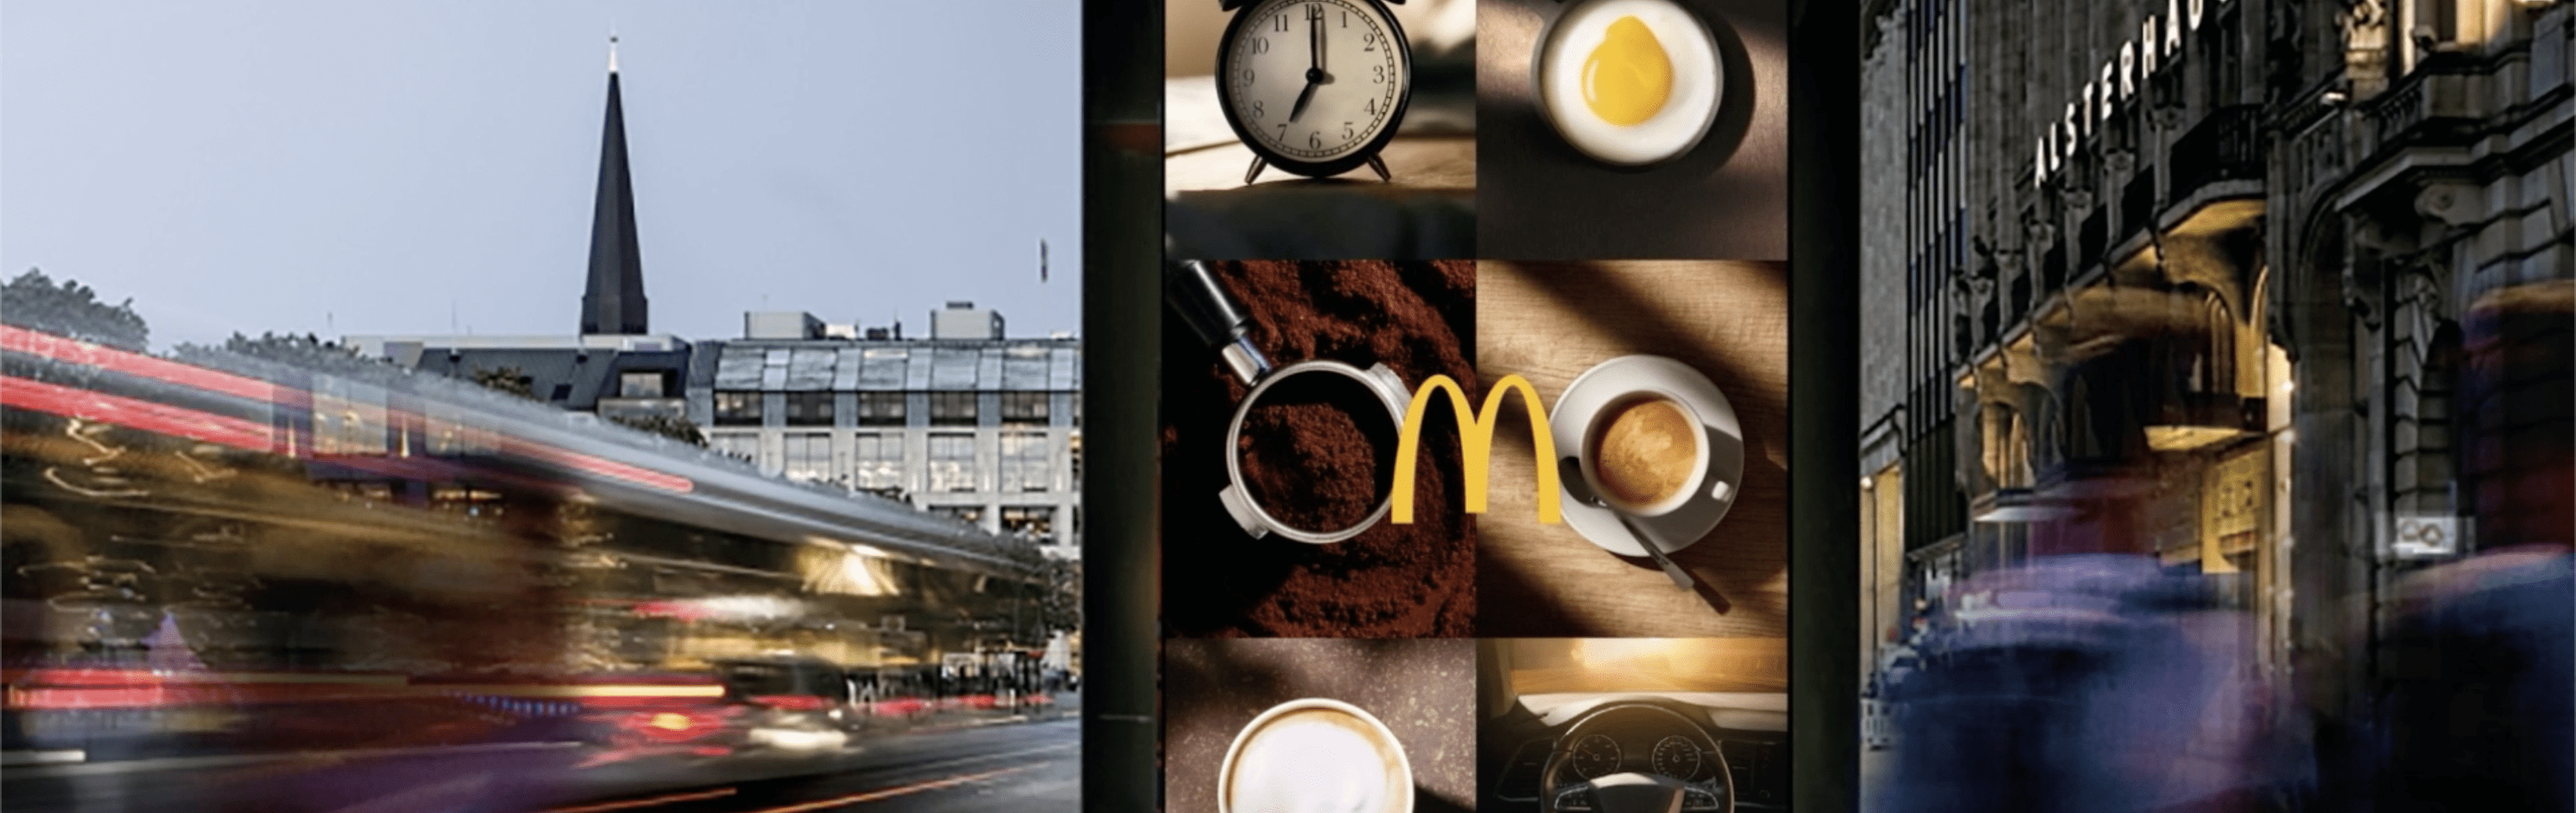 McDonald’s – Good Morning Germany